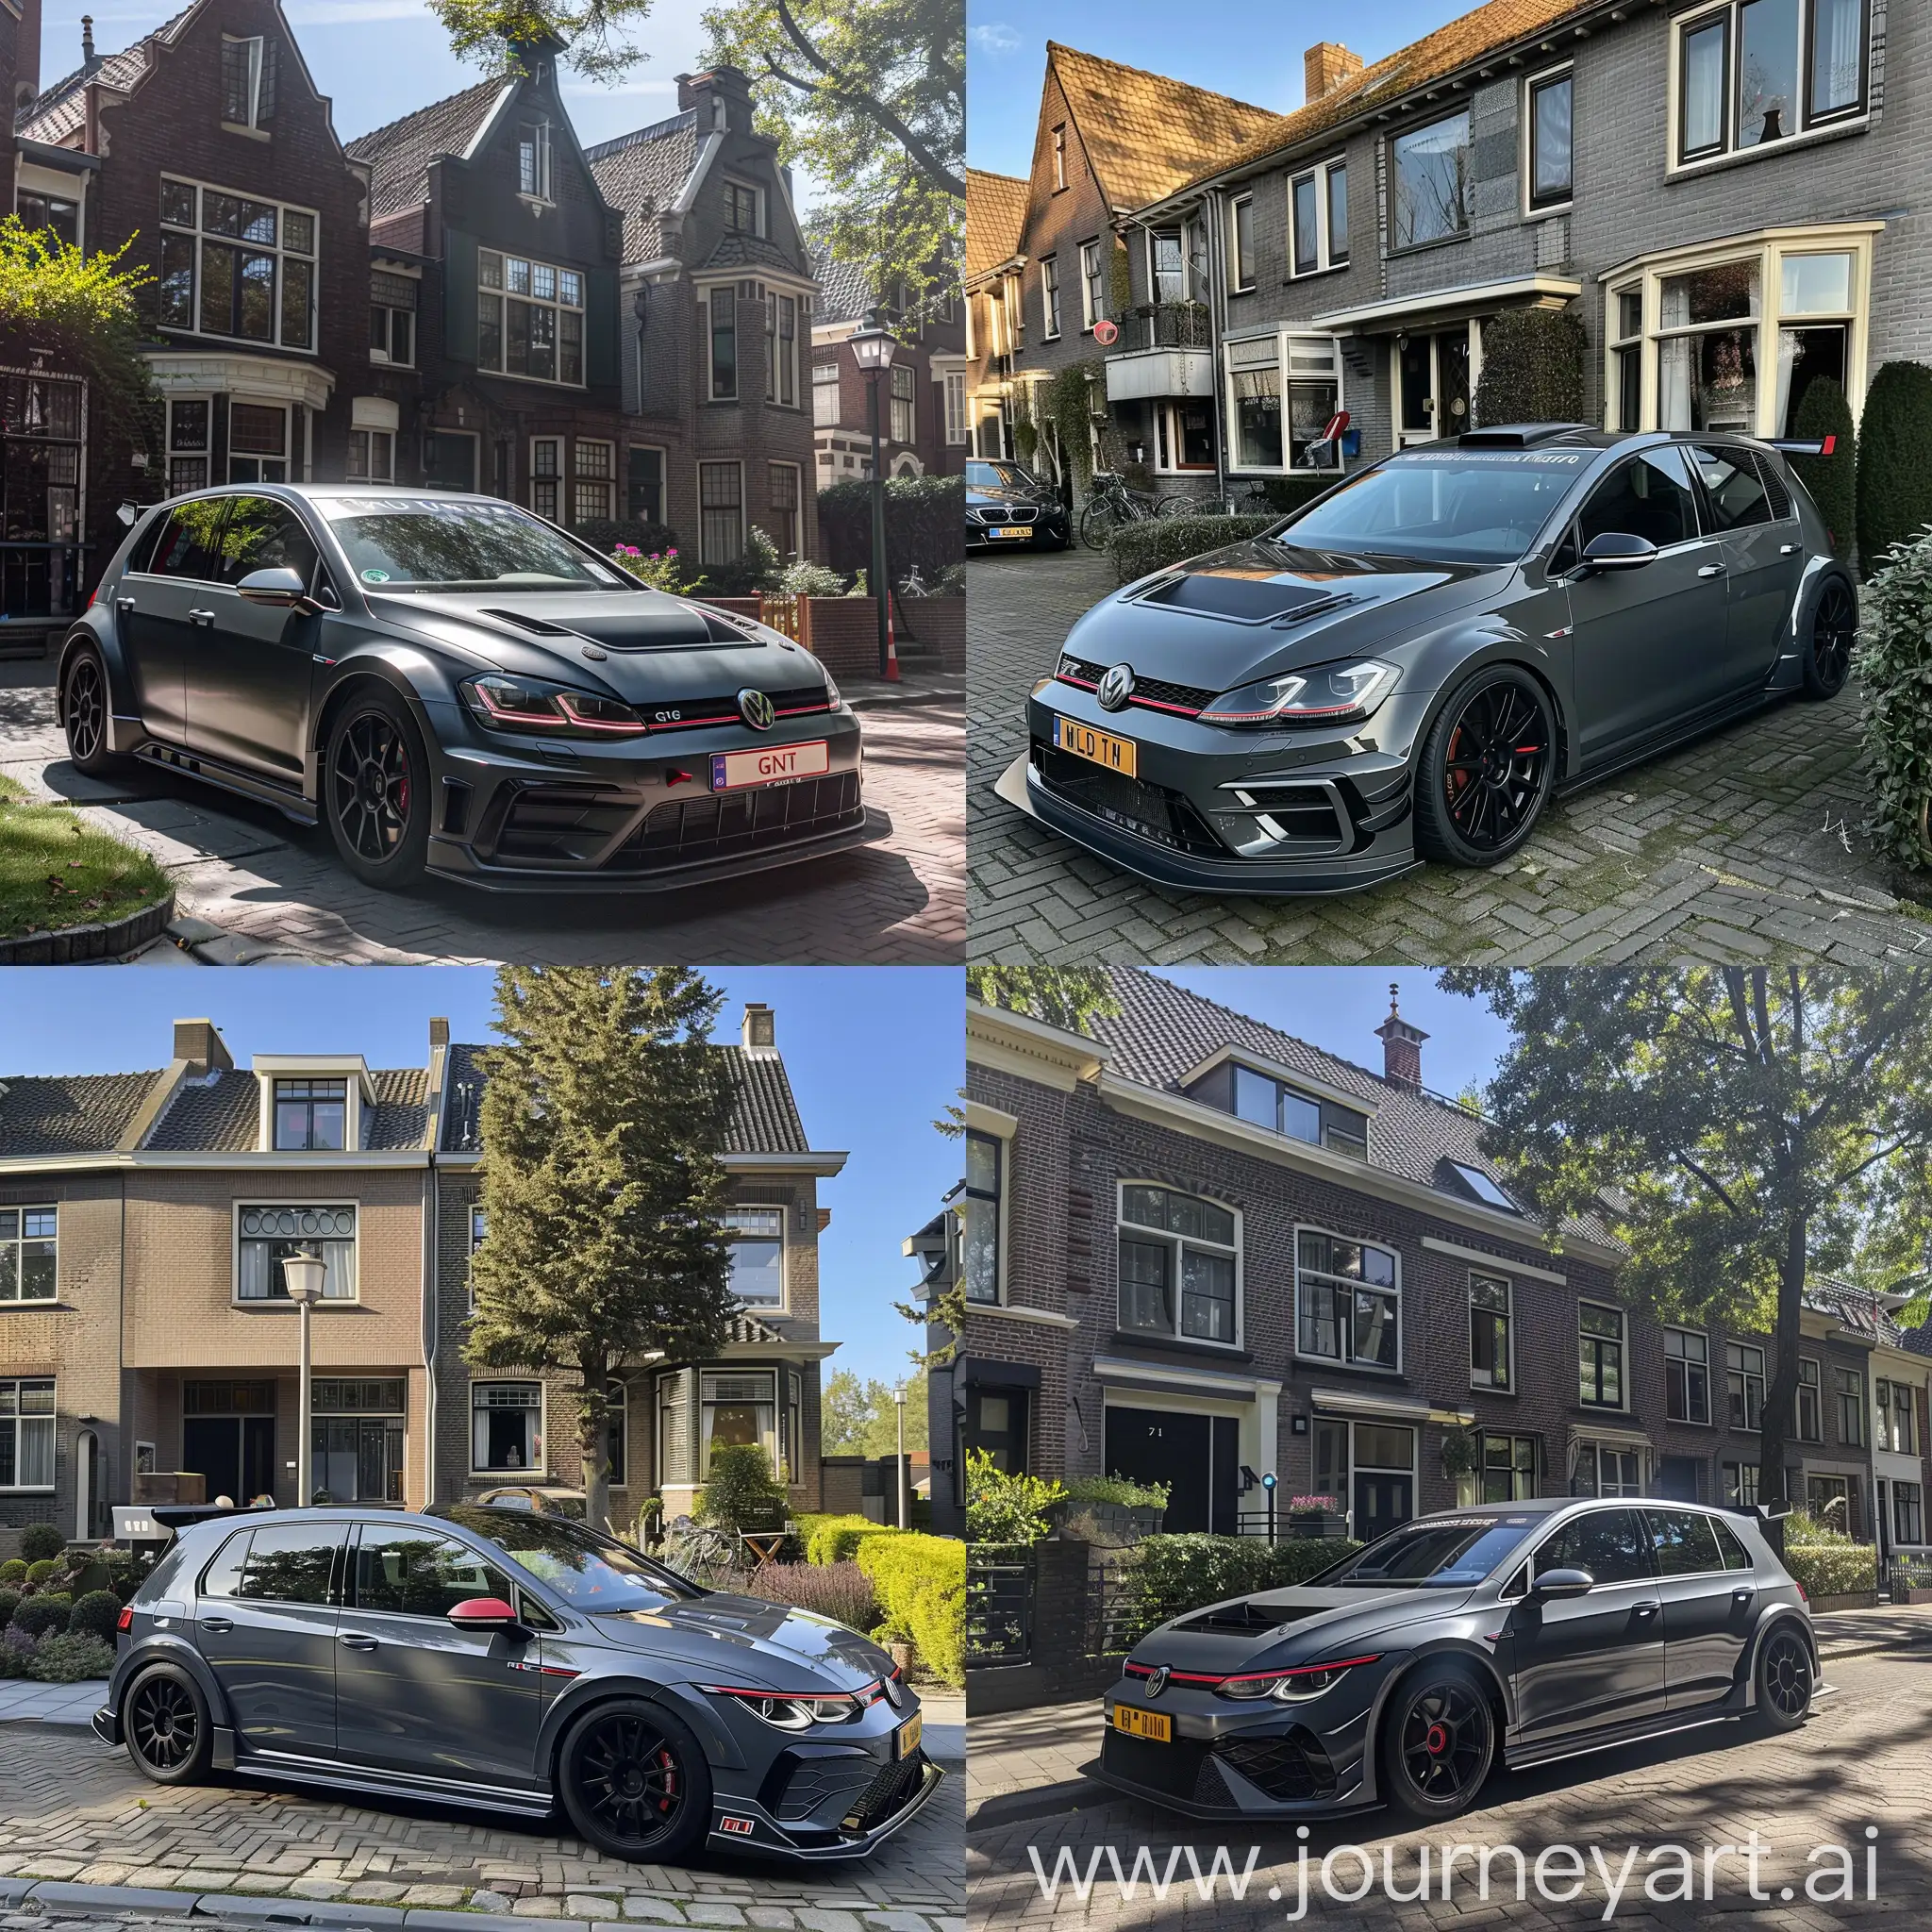 Sleek-Golf-MK7-GTI-TCR-2019-Parked-in-Urban-Setting